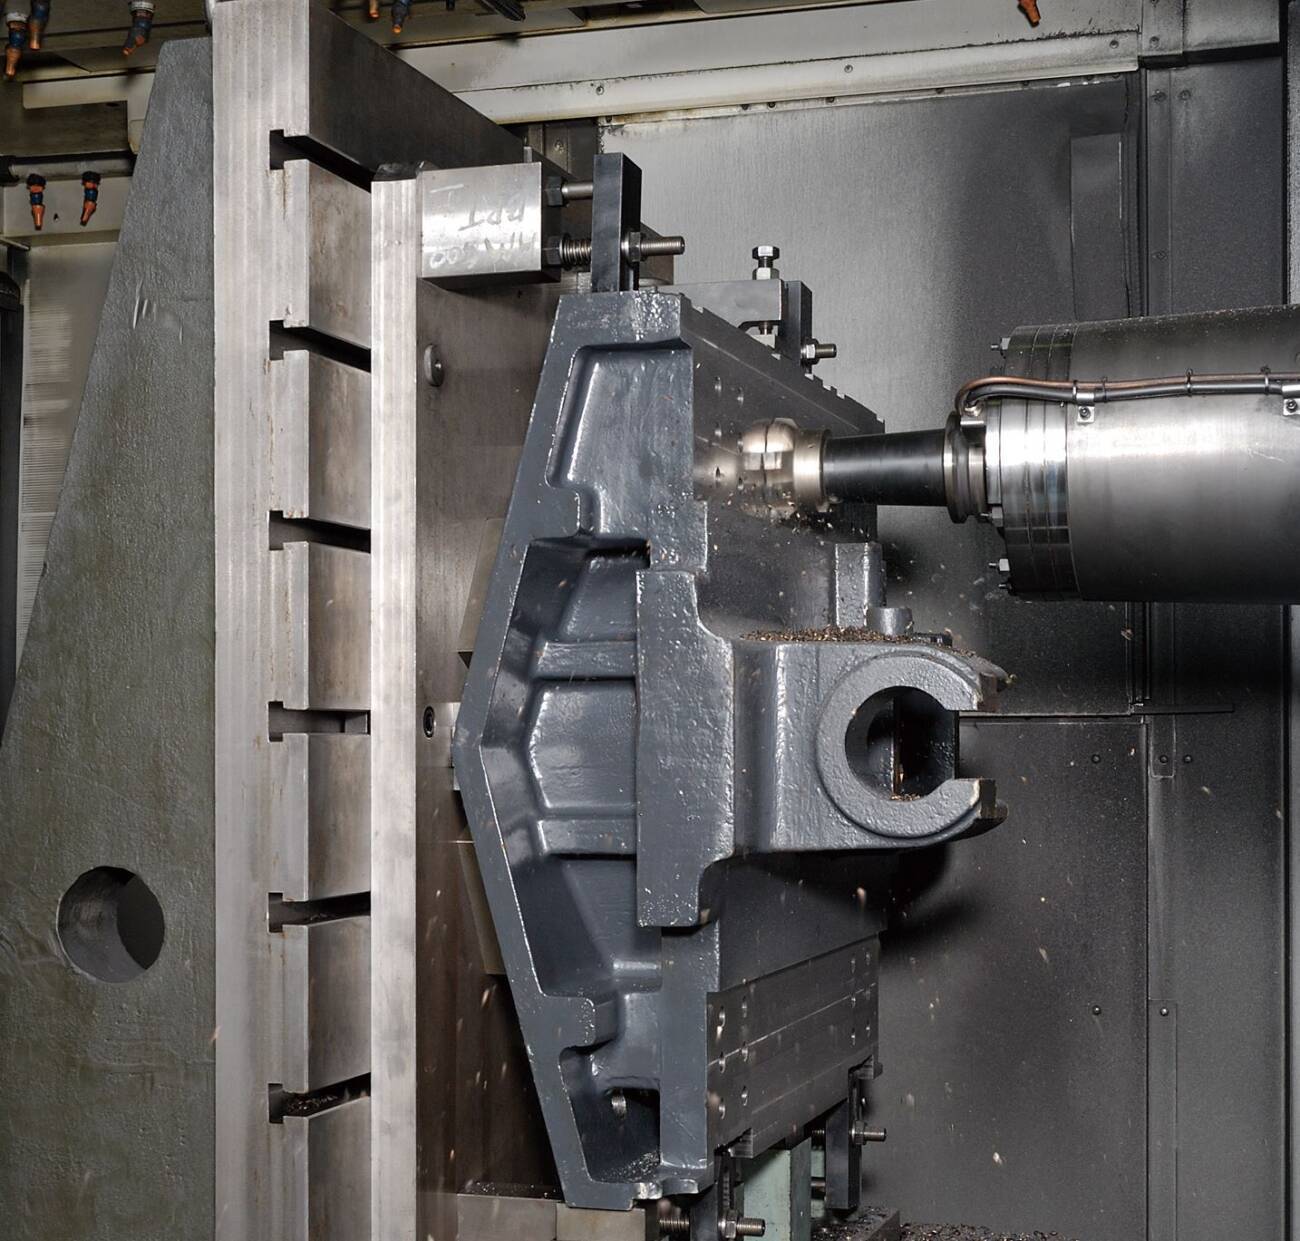 a horizontal lathe milling a part inside a cnc machine